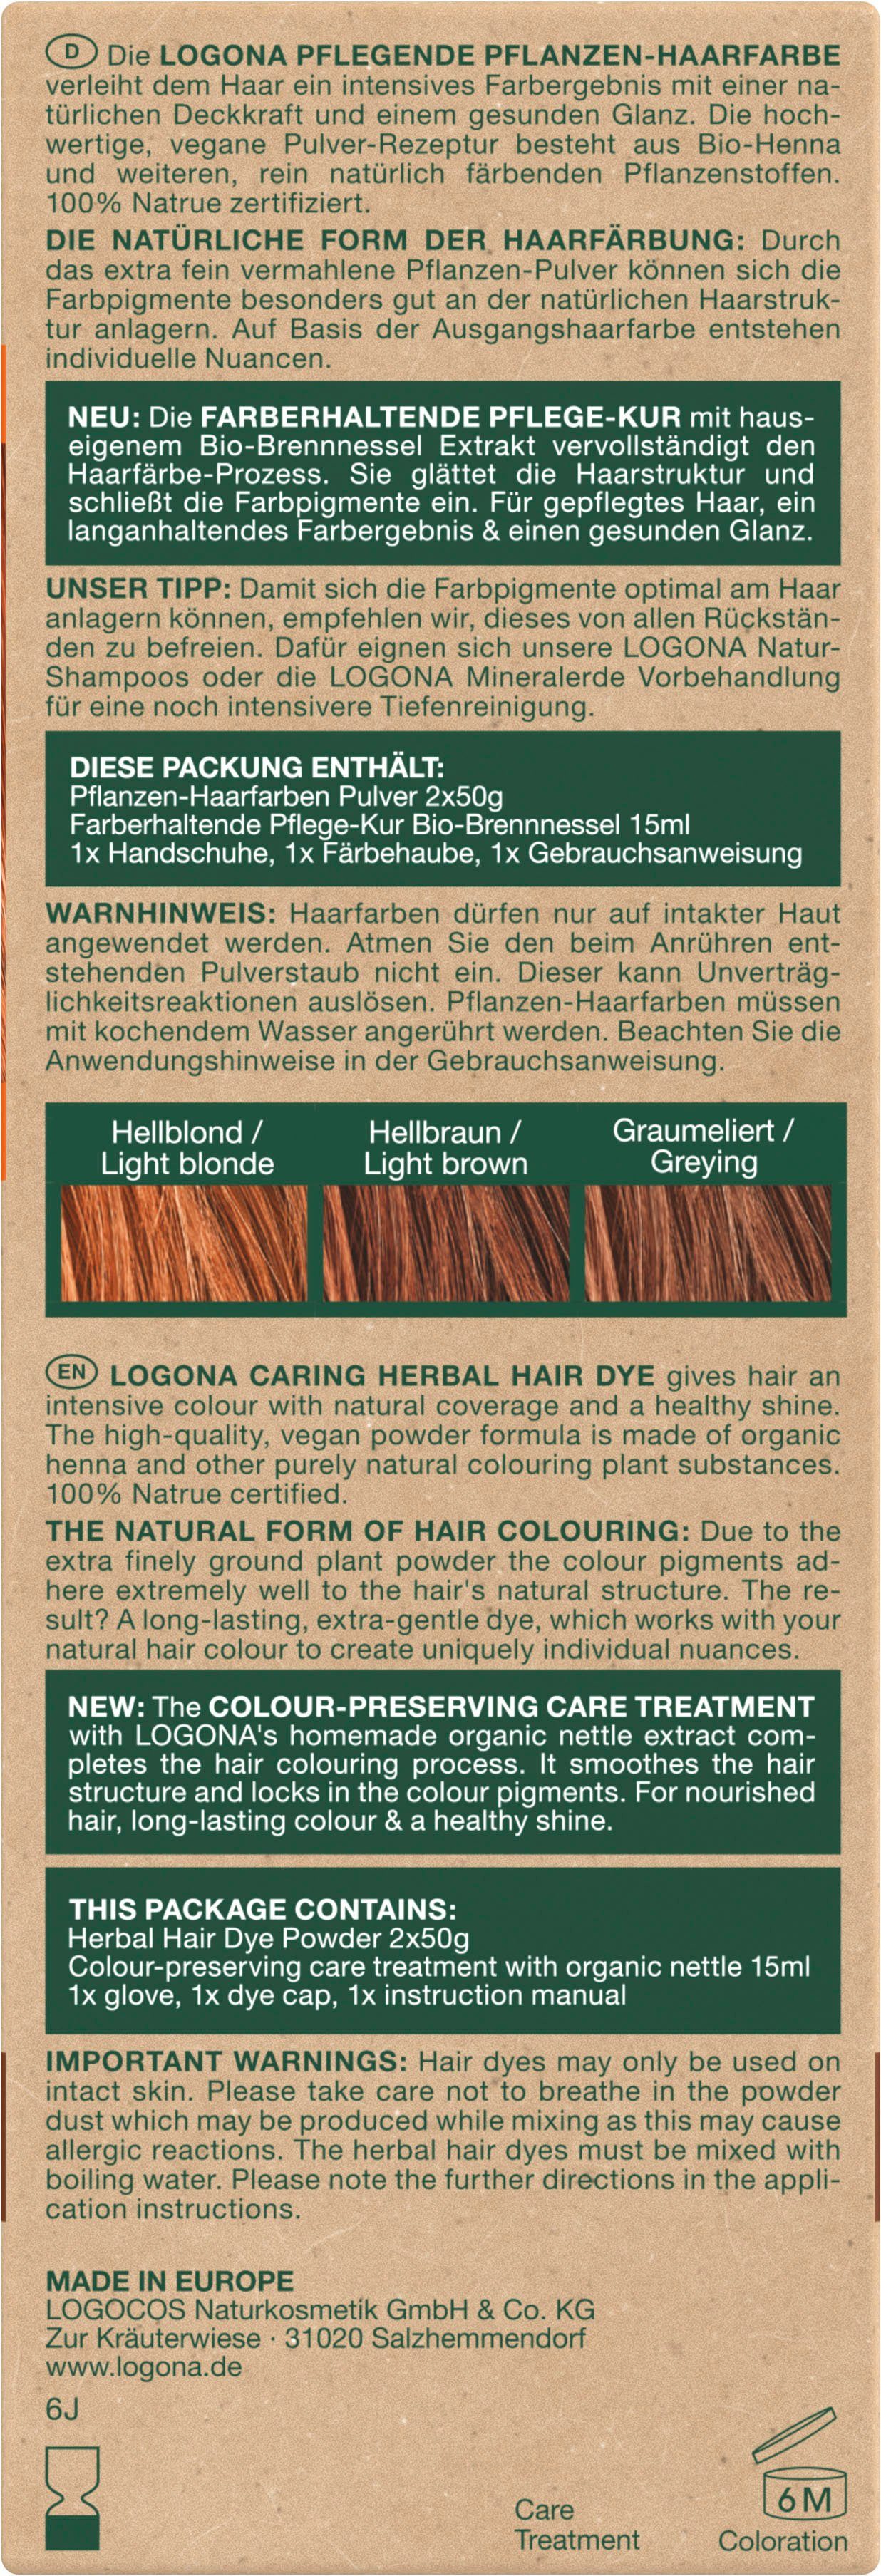 Pulver 03 Haarfarbe Flammenrot Pflanzen-Haarfarbe LOGONA